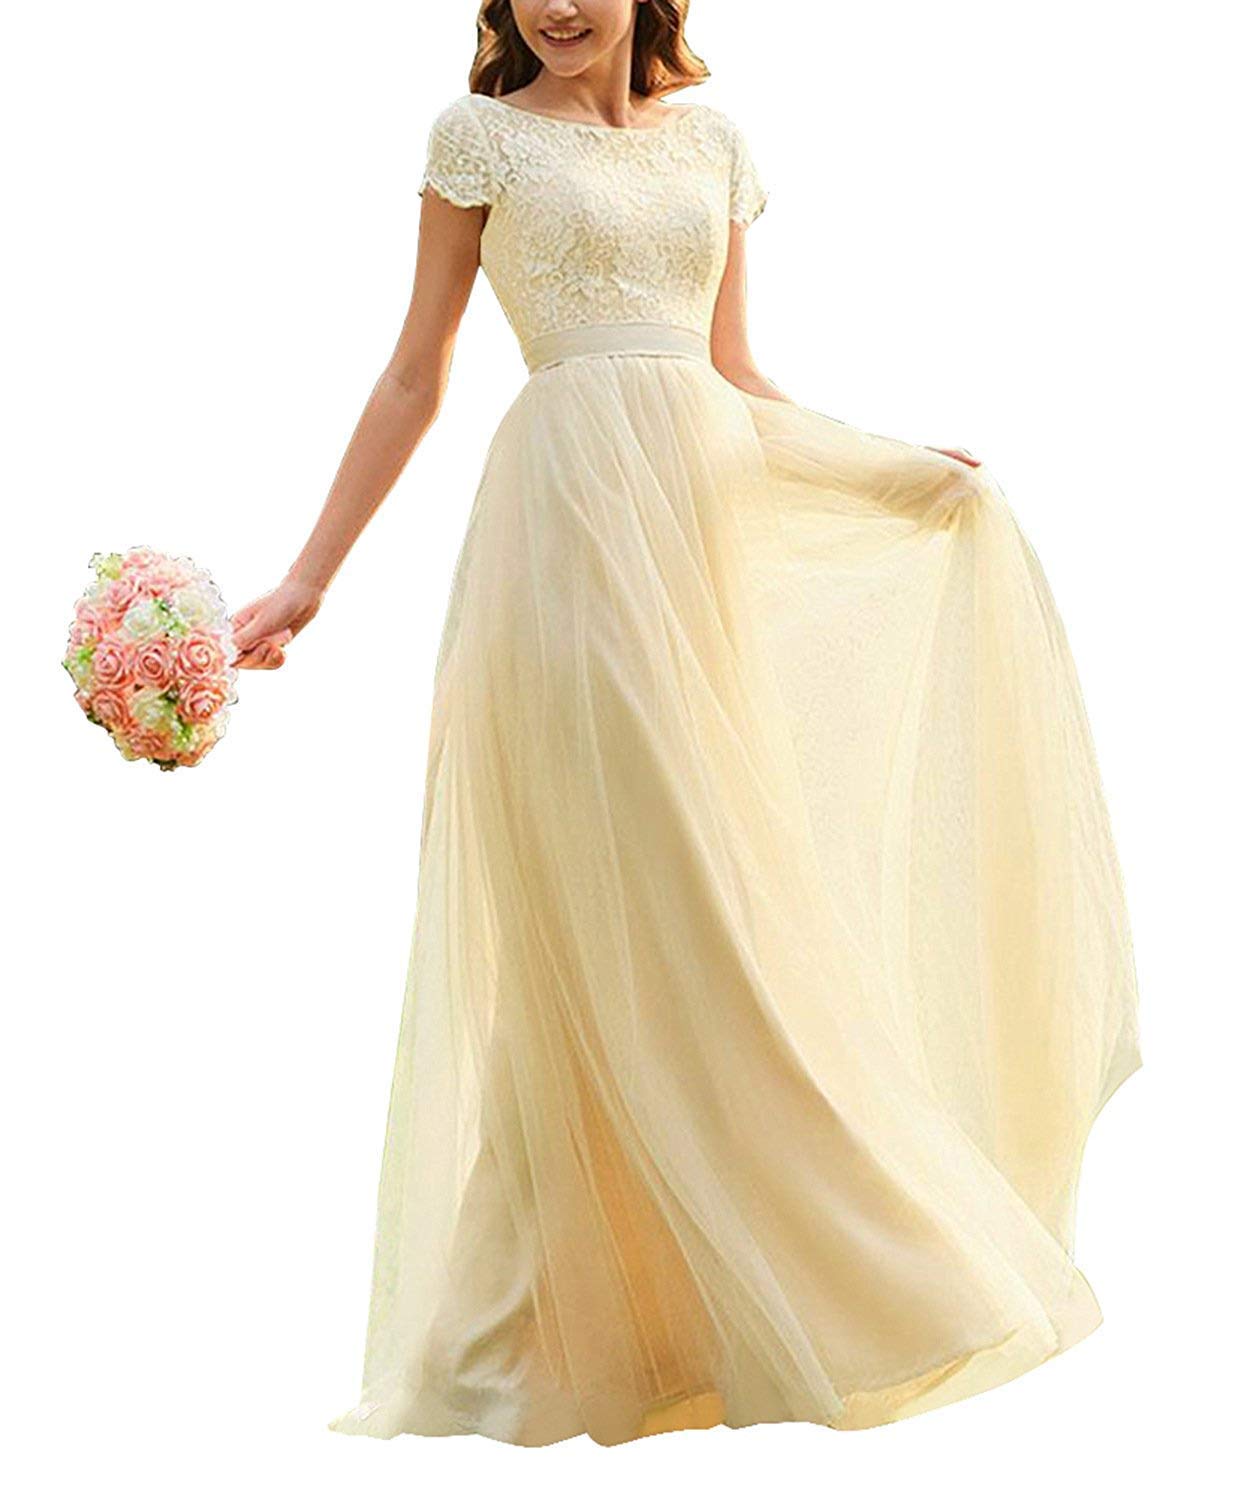 Gricharim Women's Cap Sleeve Lace Tulle Bridesmaid Dresses Long Prom Wedding Guest Dress